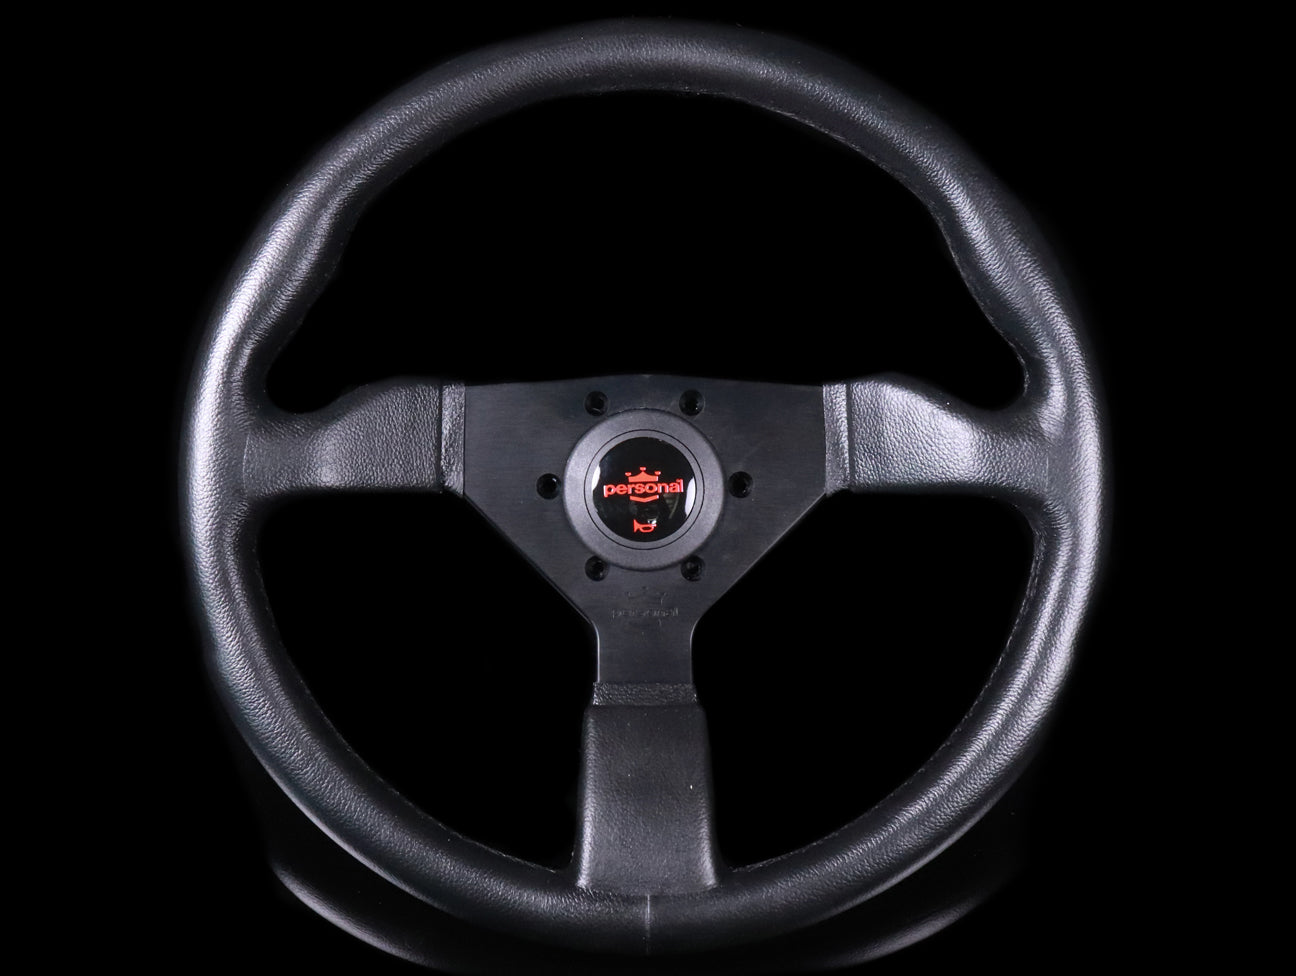 Personal Grinta 350mm Steering Wheel - Black Polyurethane /  Red Horn Button